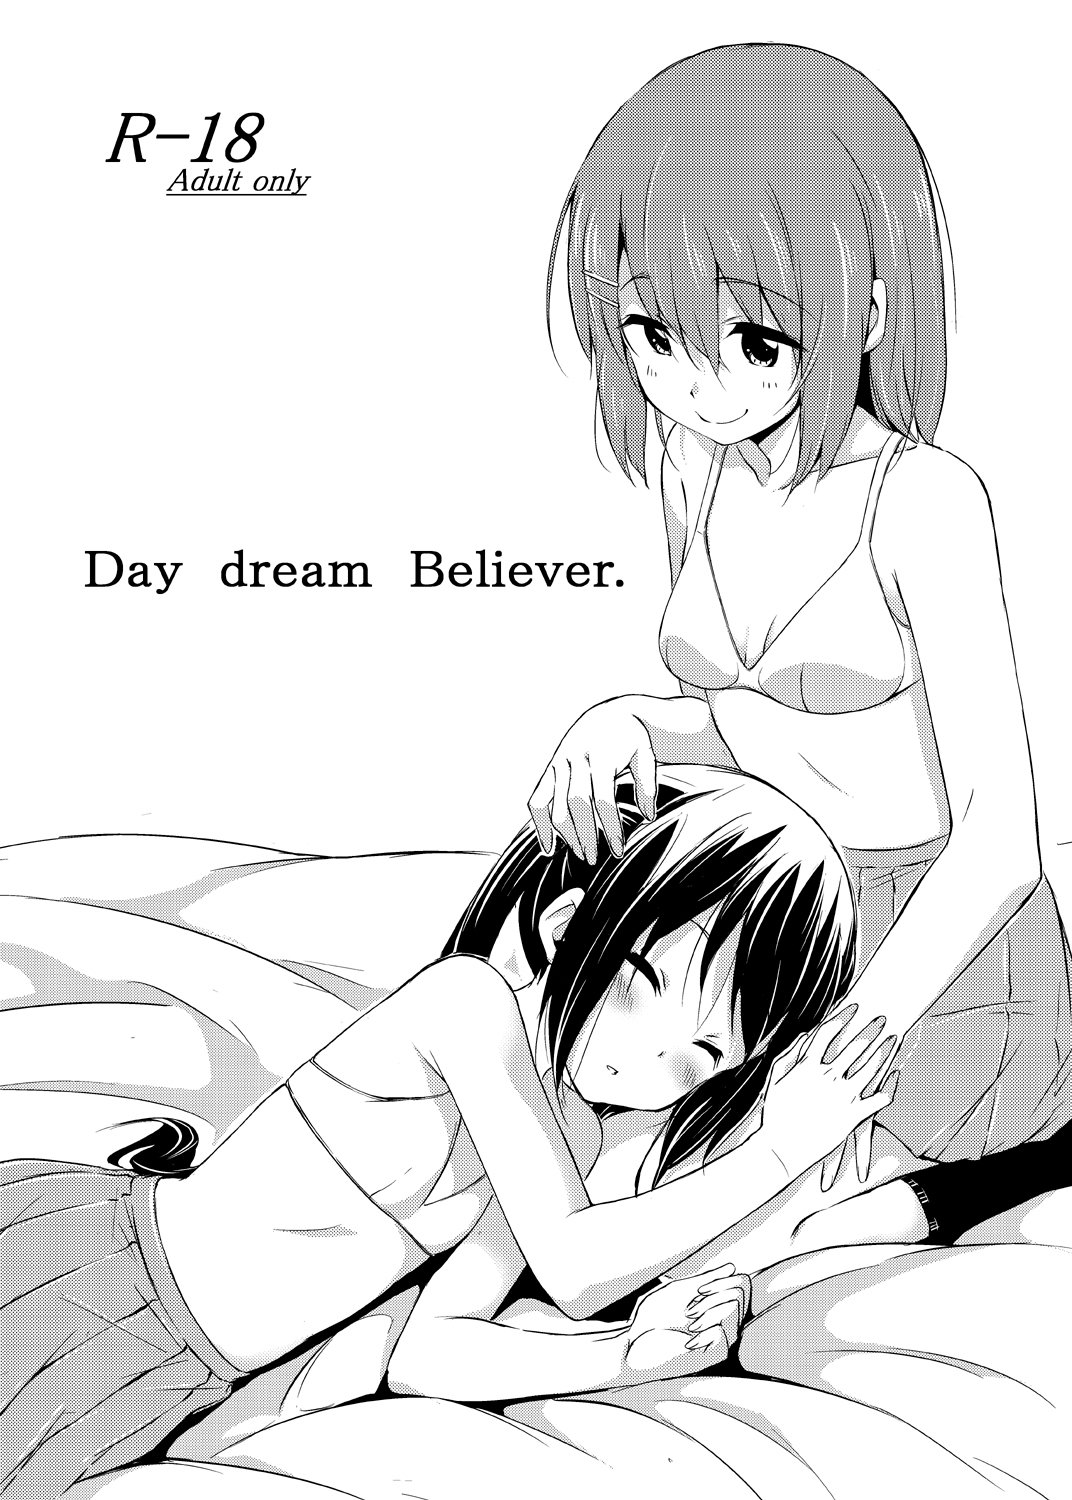 Day dream Believer - 0